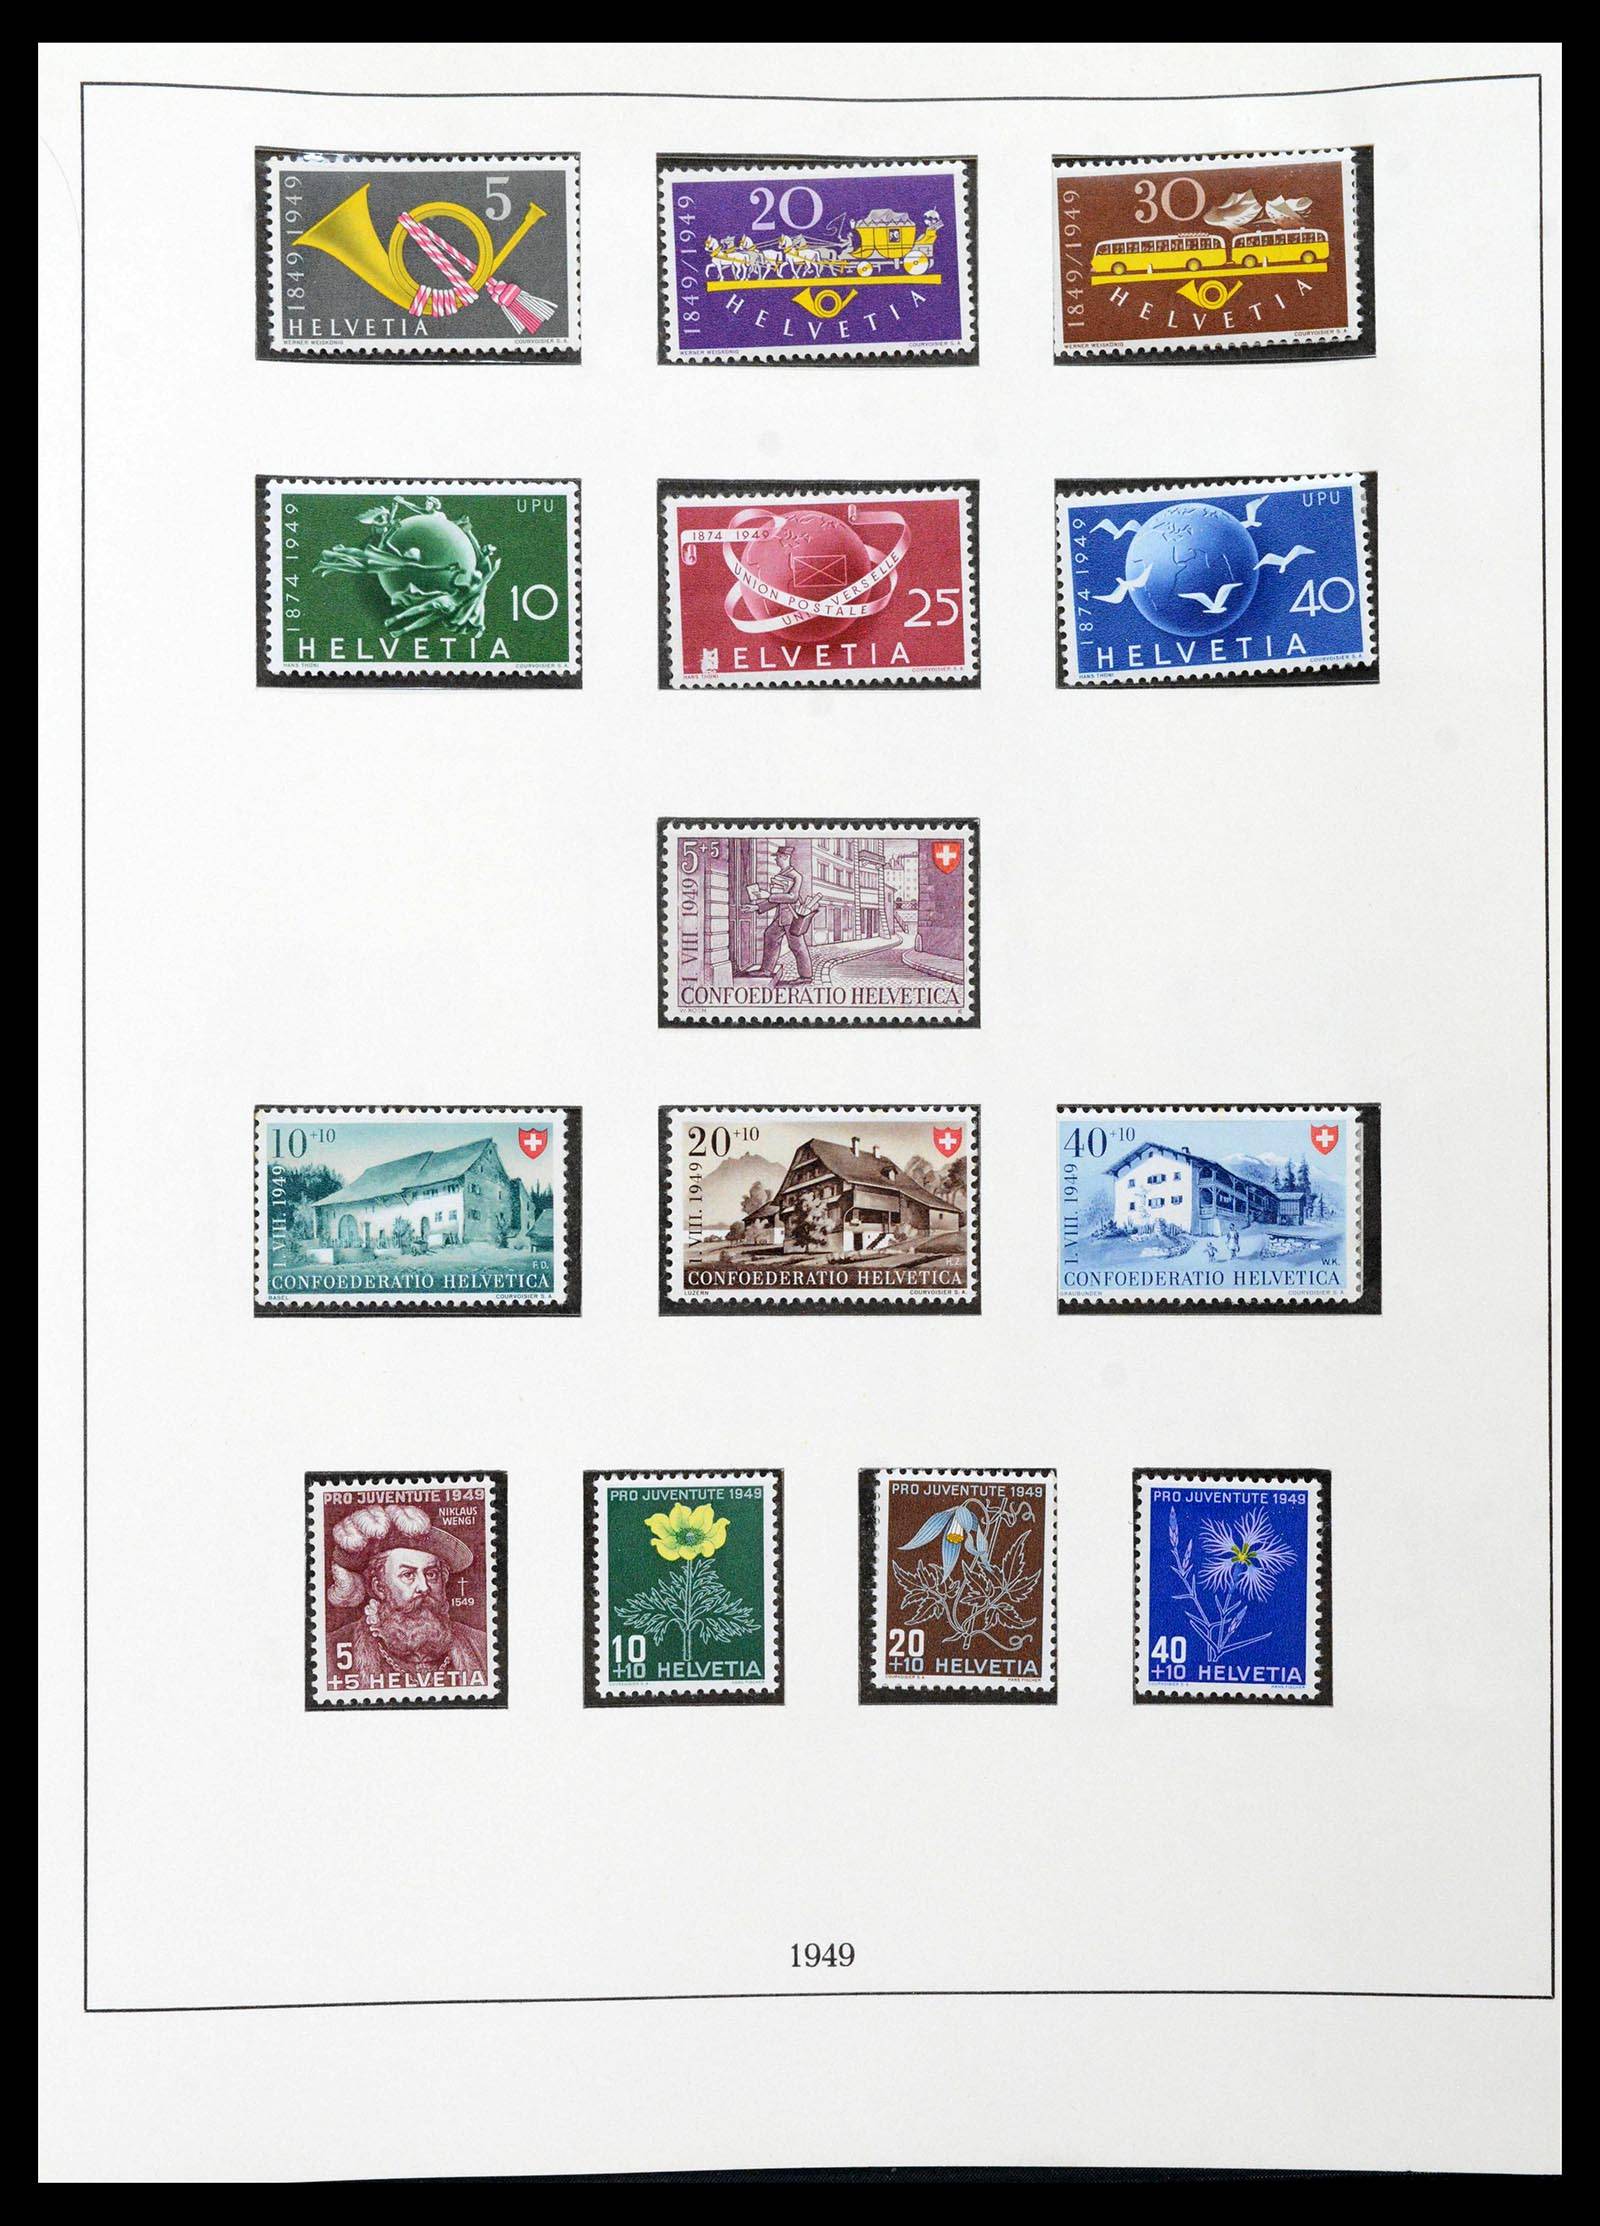 39235 0044 - Stamp collection 39235 Switzerland 1843-1960.